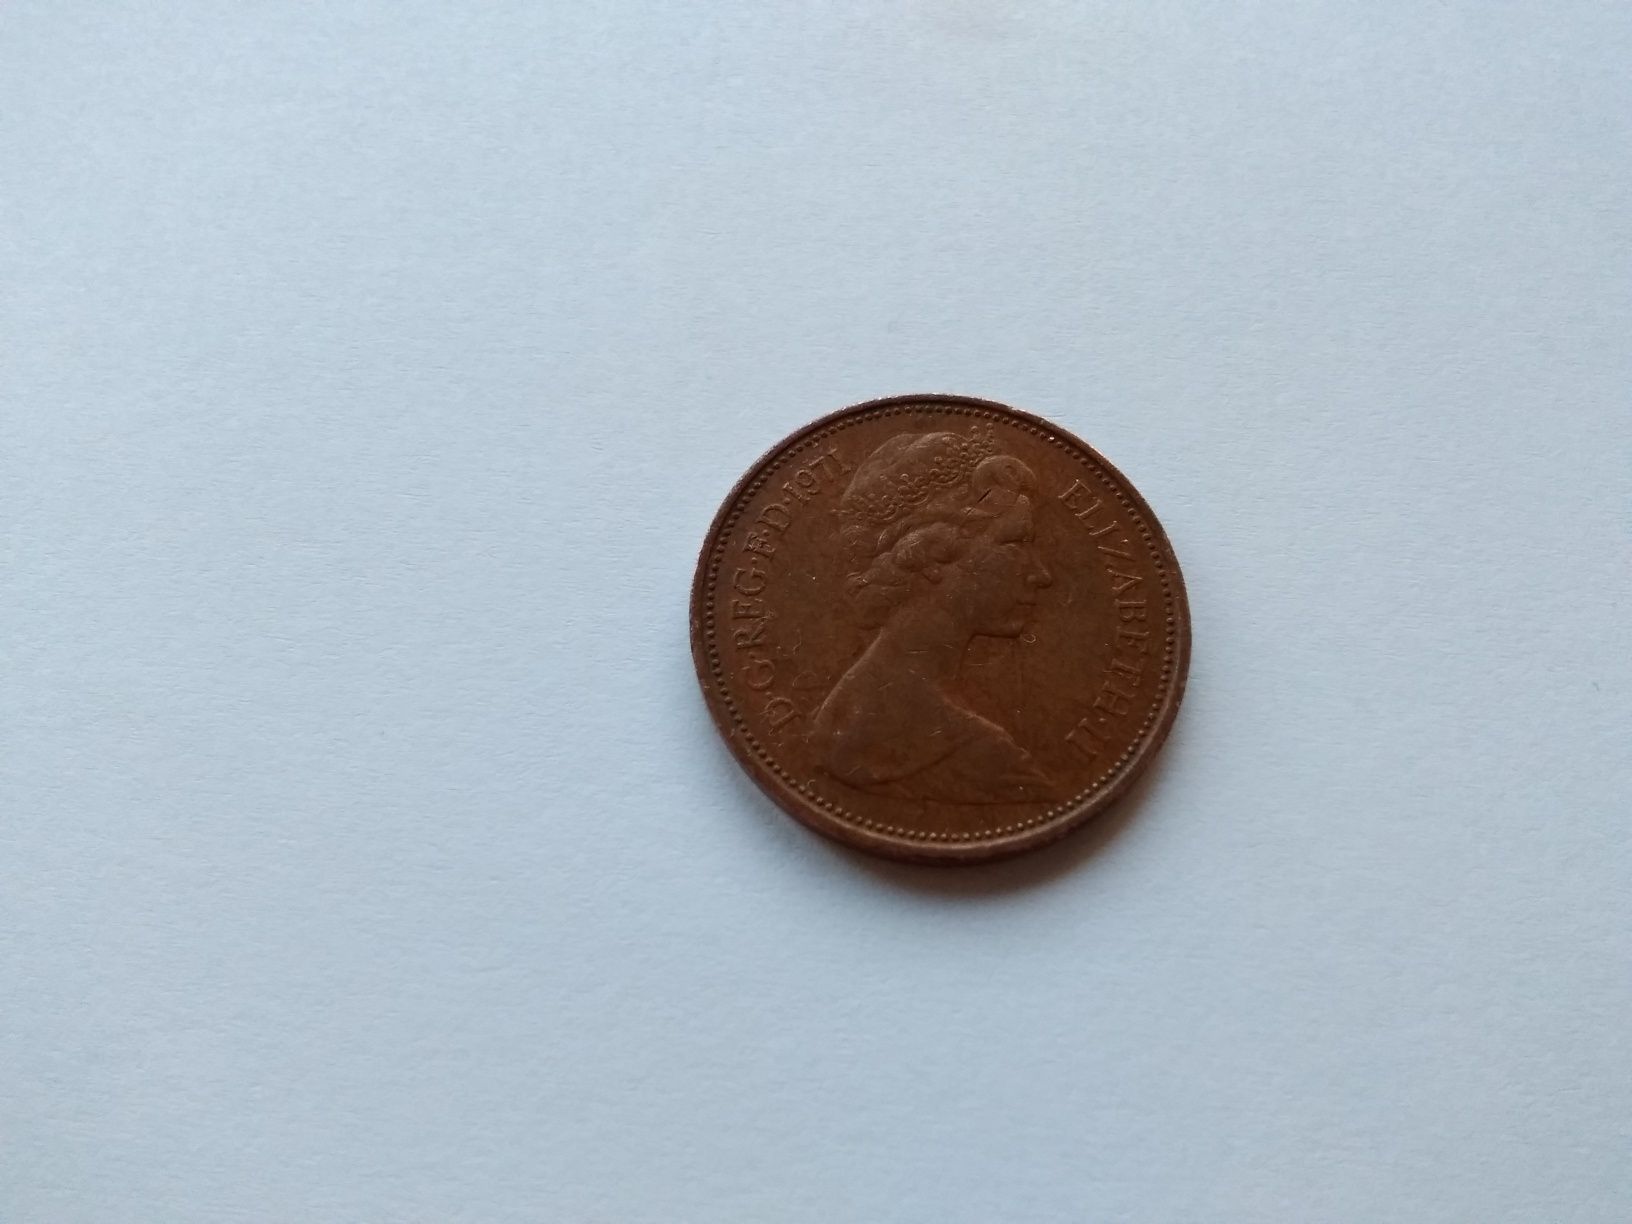 New One Penny 1 1971r Oraz New Pence 2 1971r Elizabeth II D.G REG.F.D